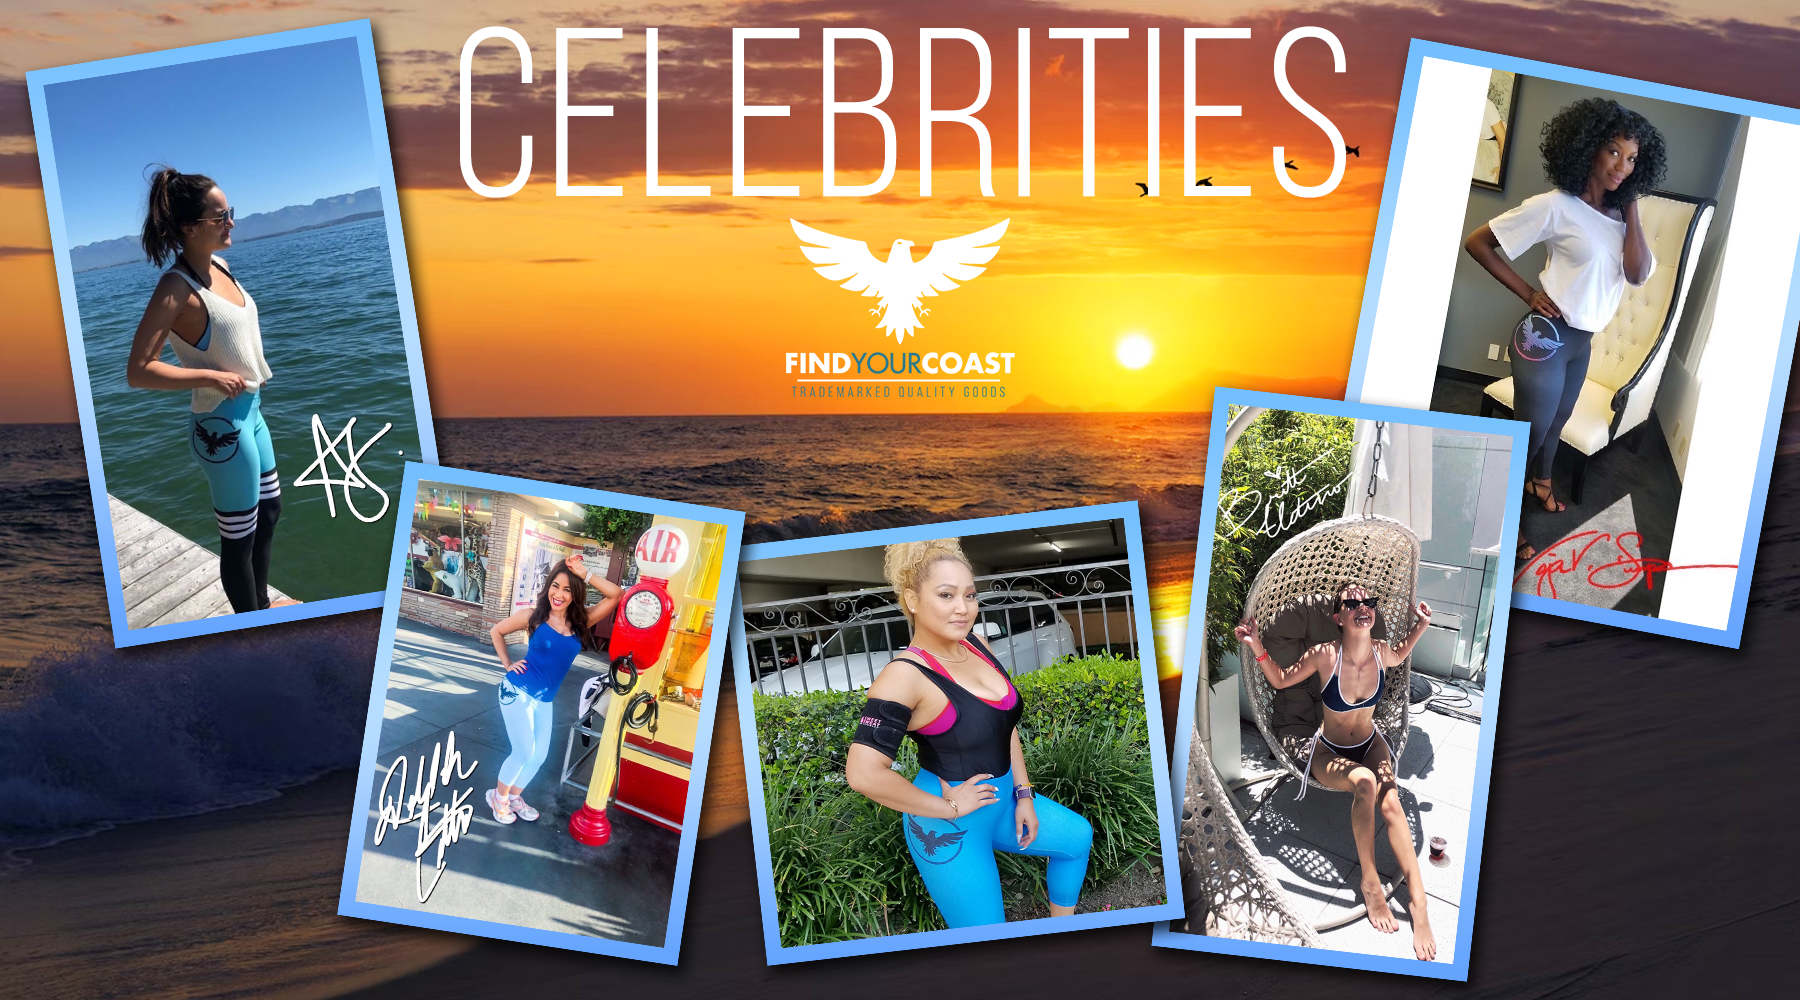 Find Your Coast Celebrities loving the coast lifestyle